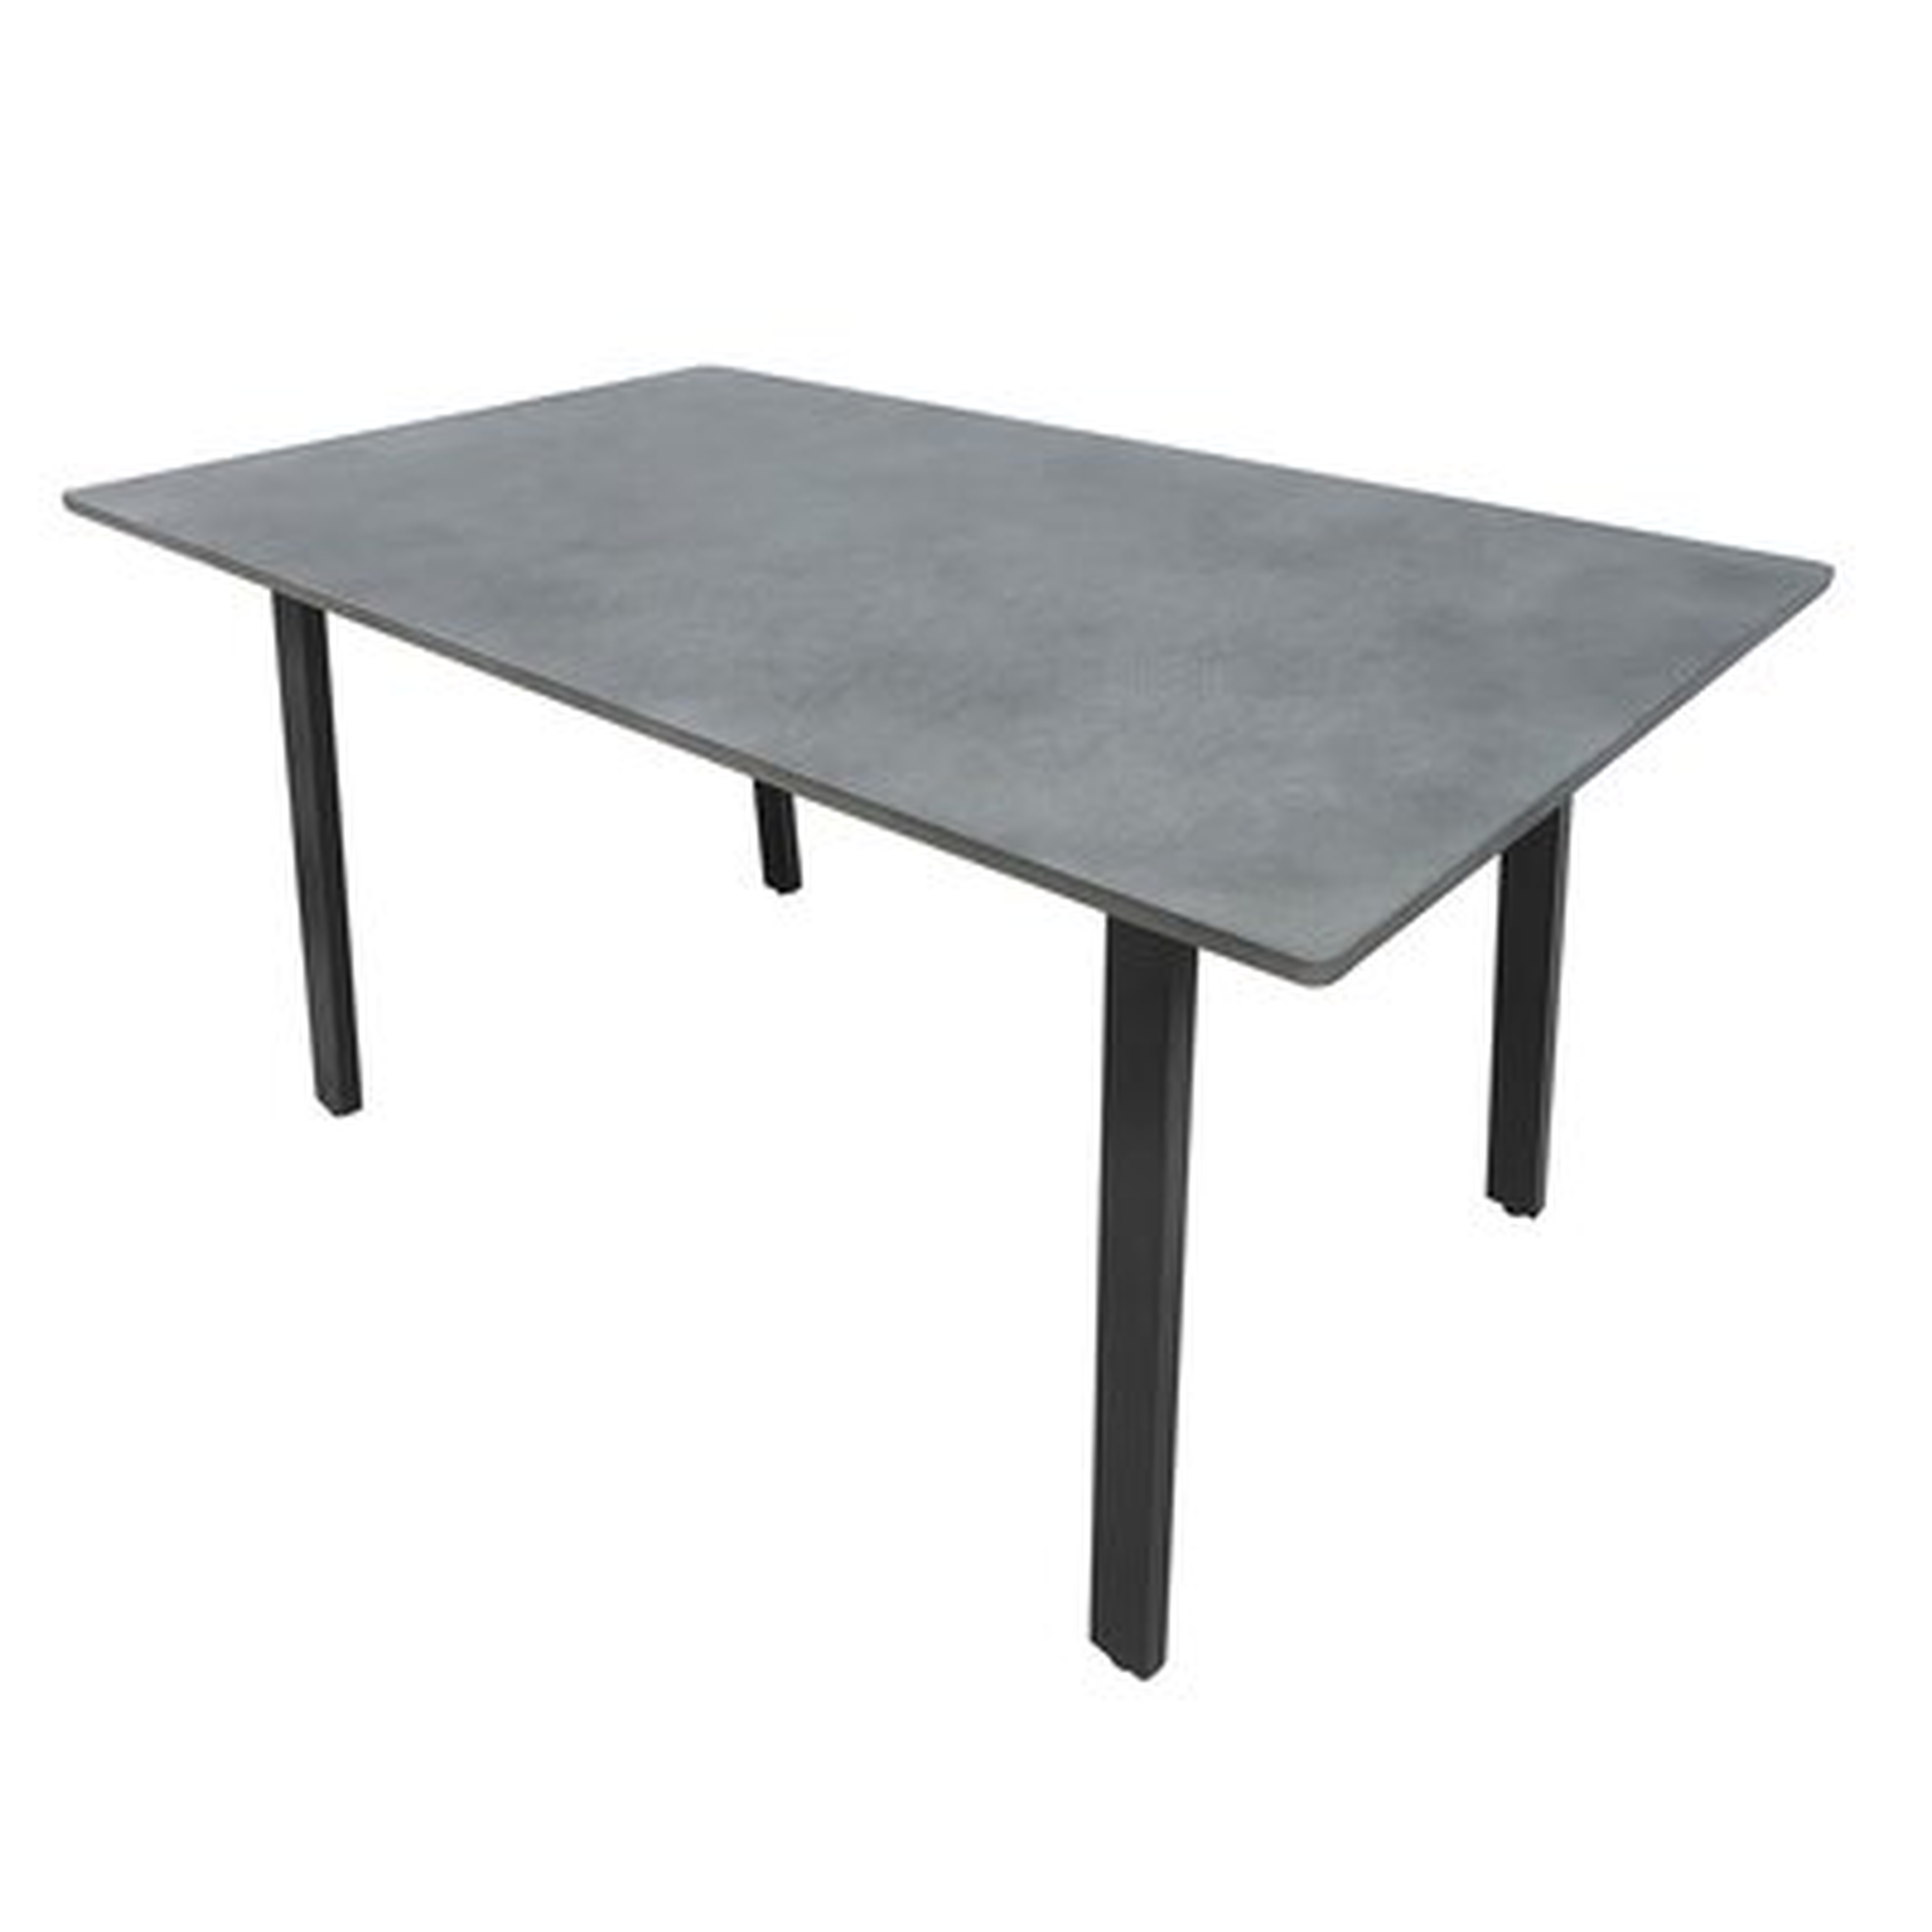 60" Concrete Outdoor Dining Table - Wayfair